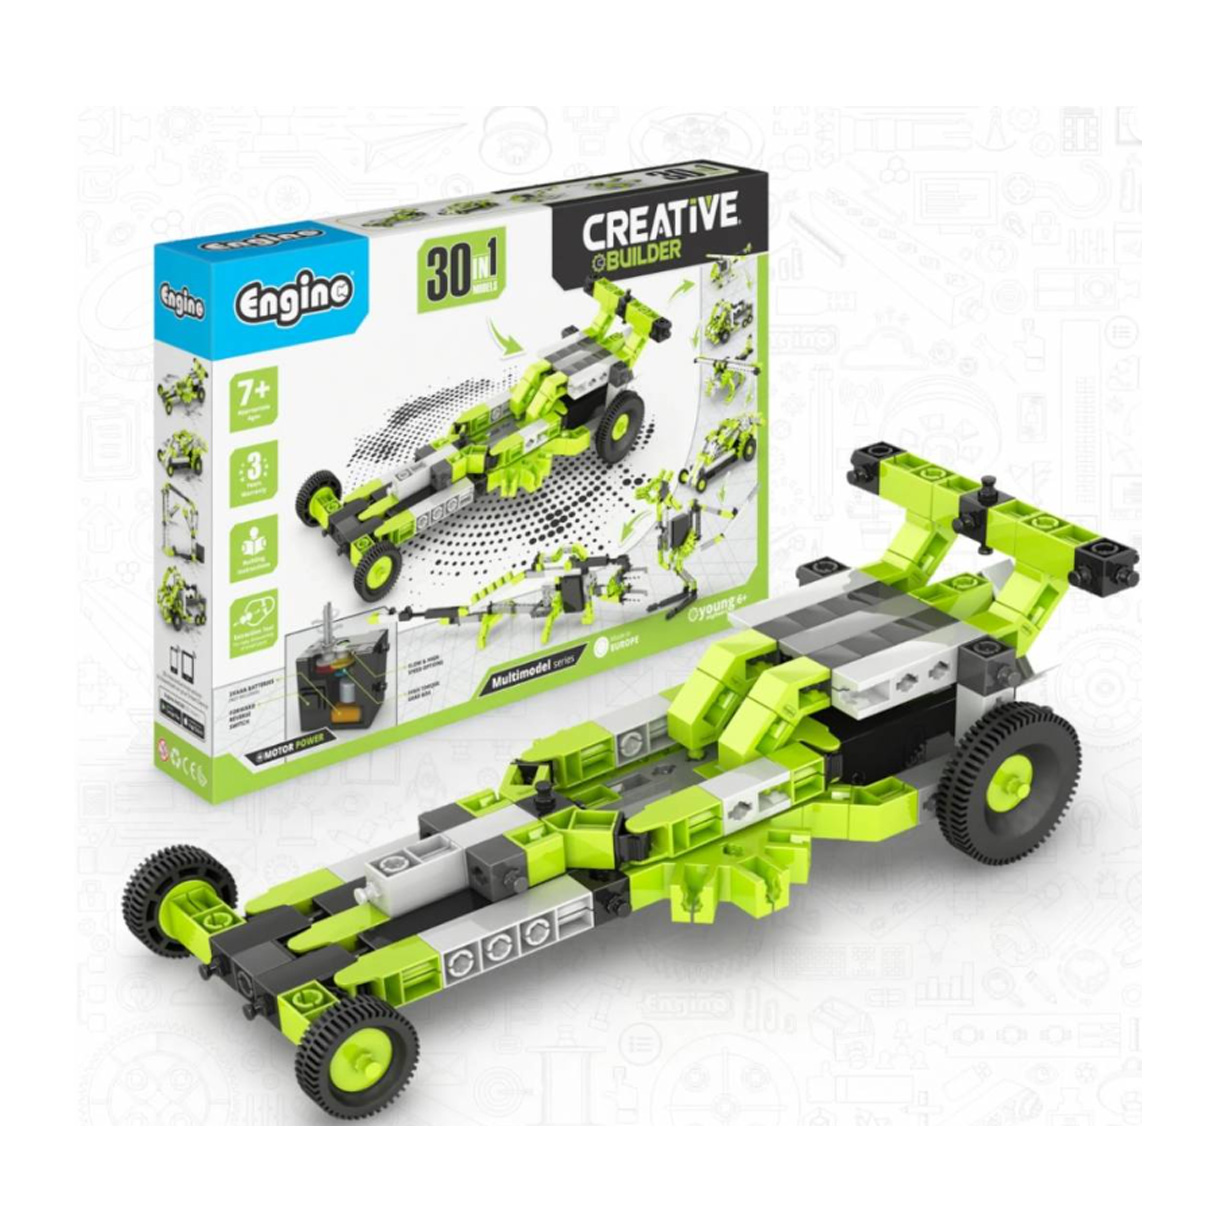 creative builder 30 modelos motorized set (toy partner - 3030)